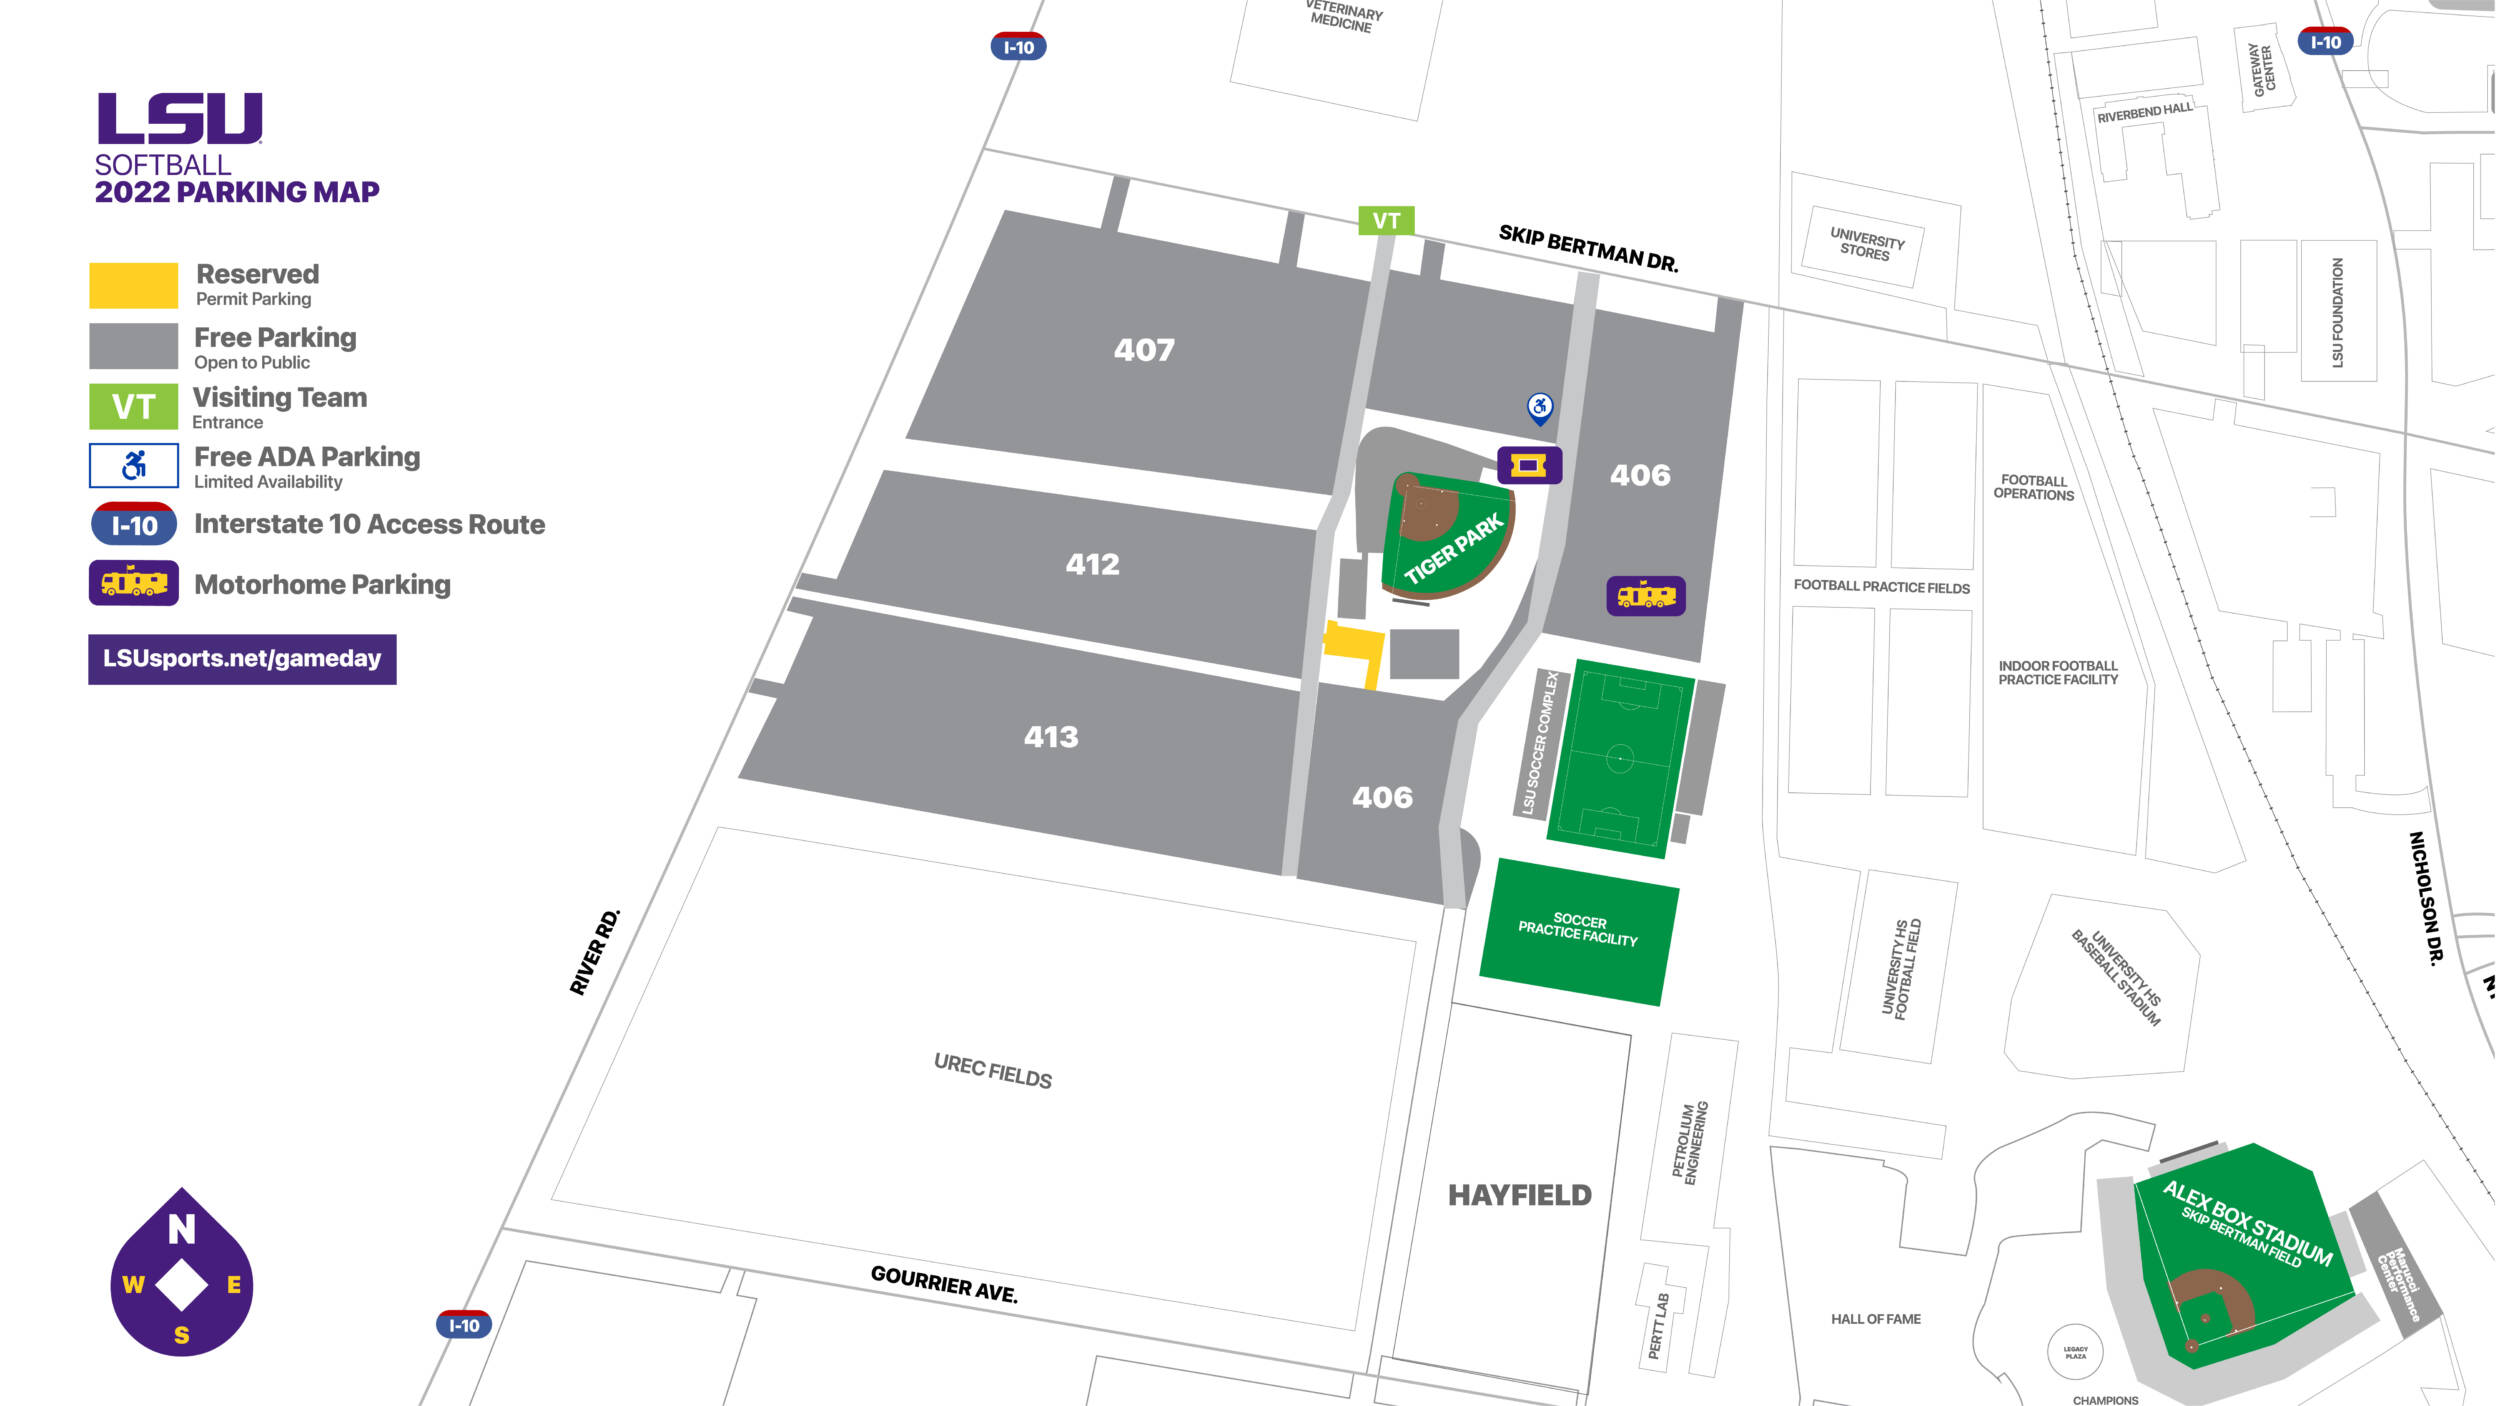 2022 Tiger Park - LSU Softball Parking Map